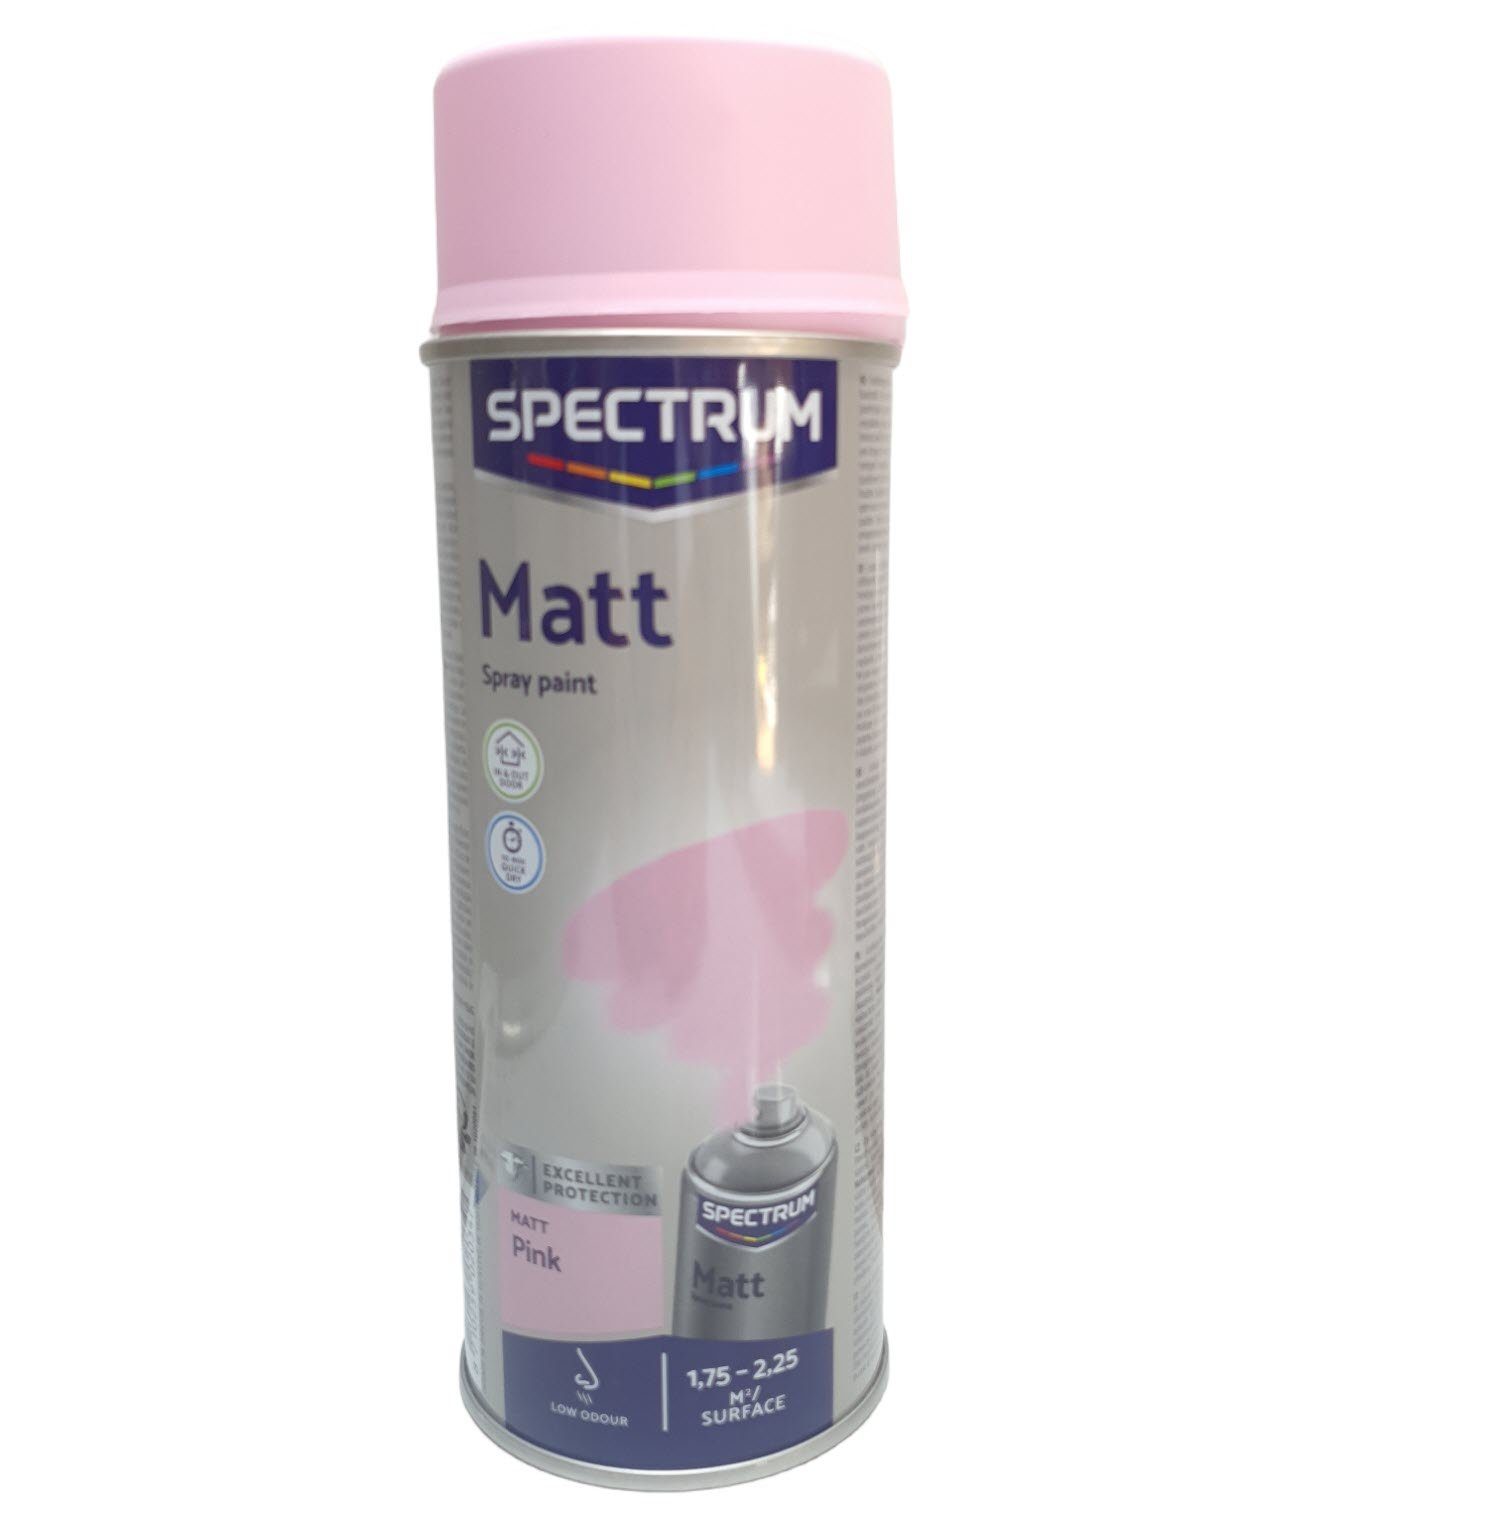 Sprühlack weiss ml Paint matt Lackspray Acryllack Spray 400 Spectrum Sprühlack